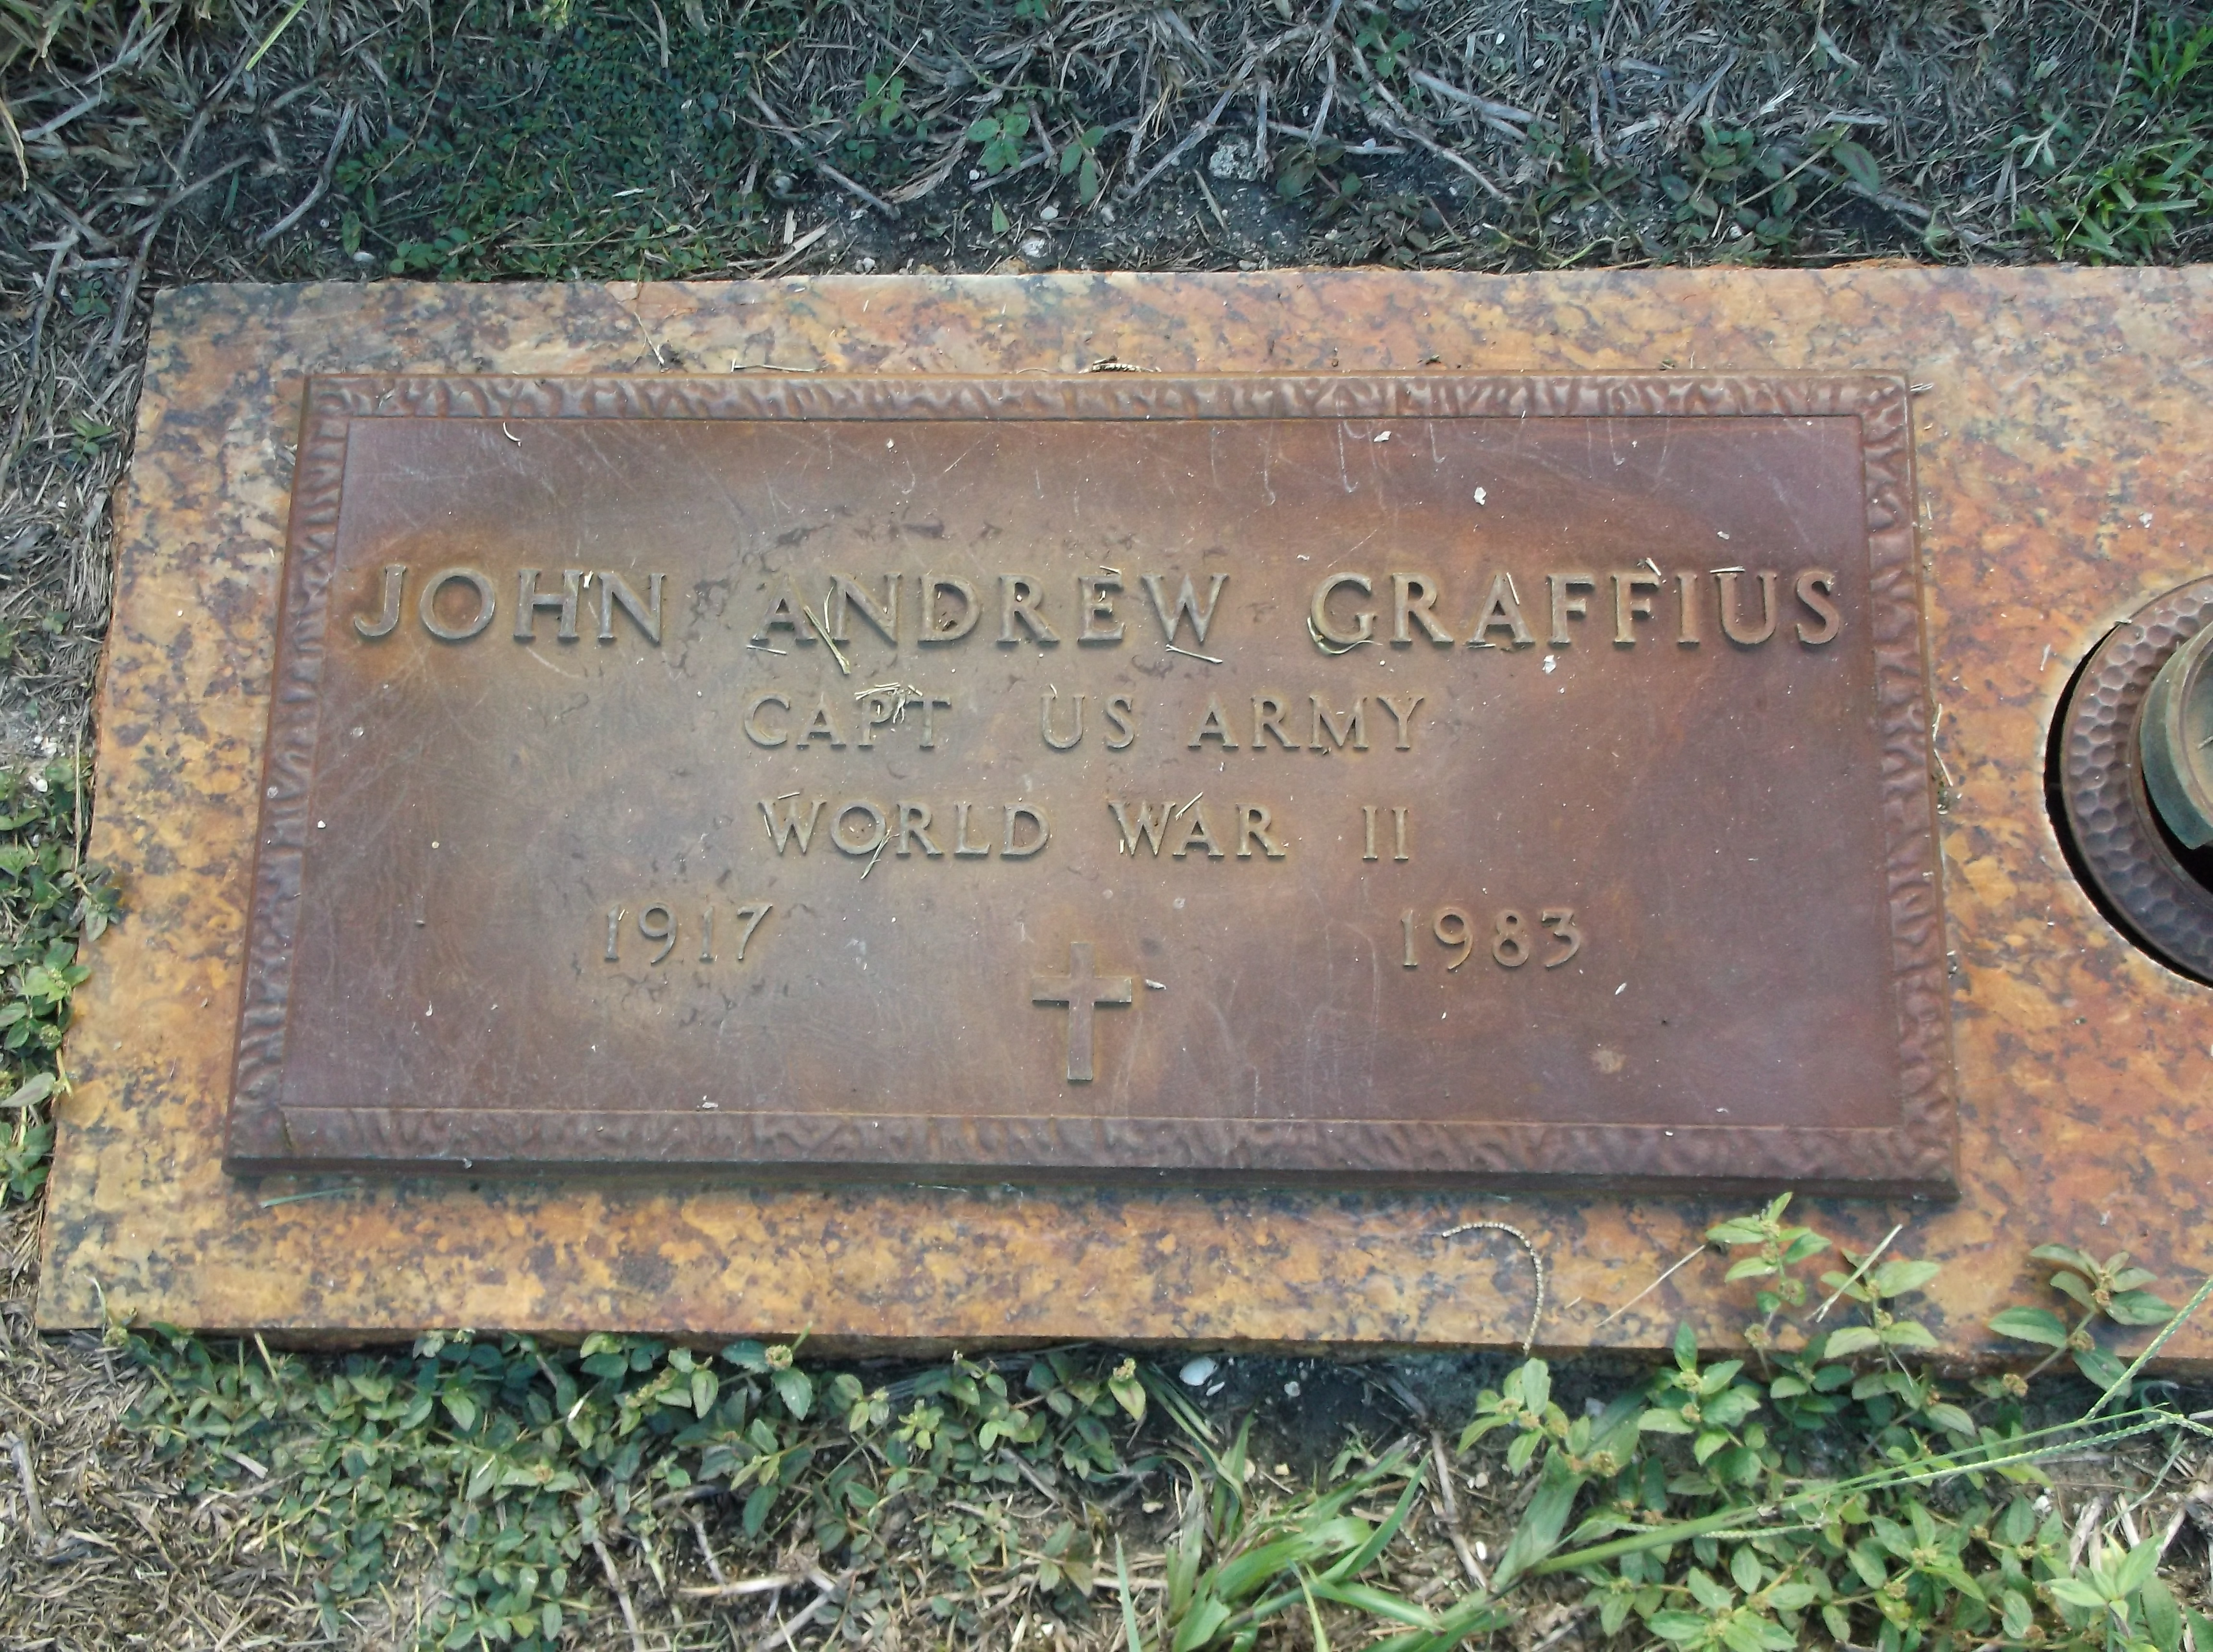 John Andrew Graffius